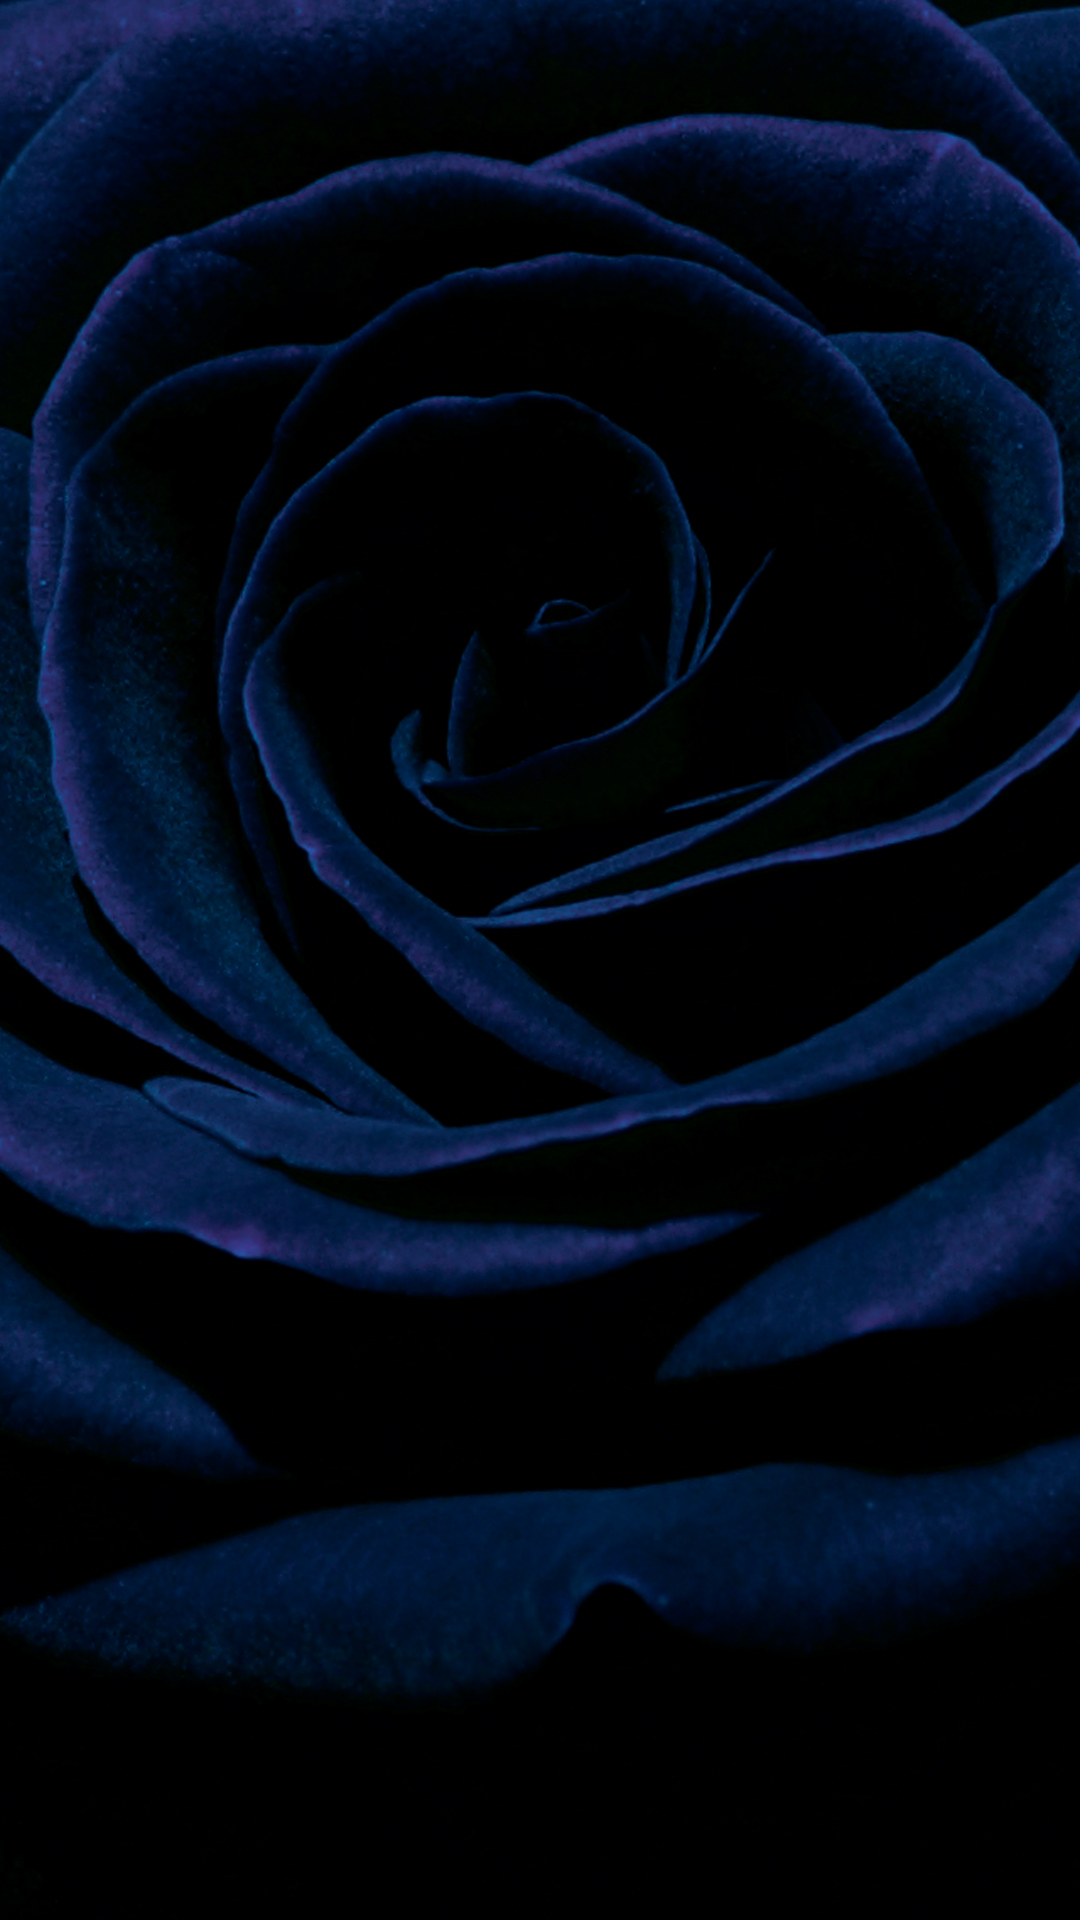 Rose 黒色の薔薇 Pc スマートフォンの壁紙 スマートマイズ